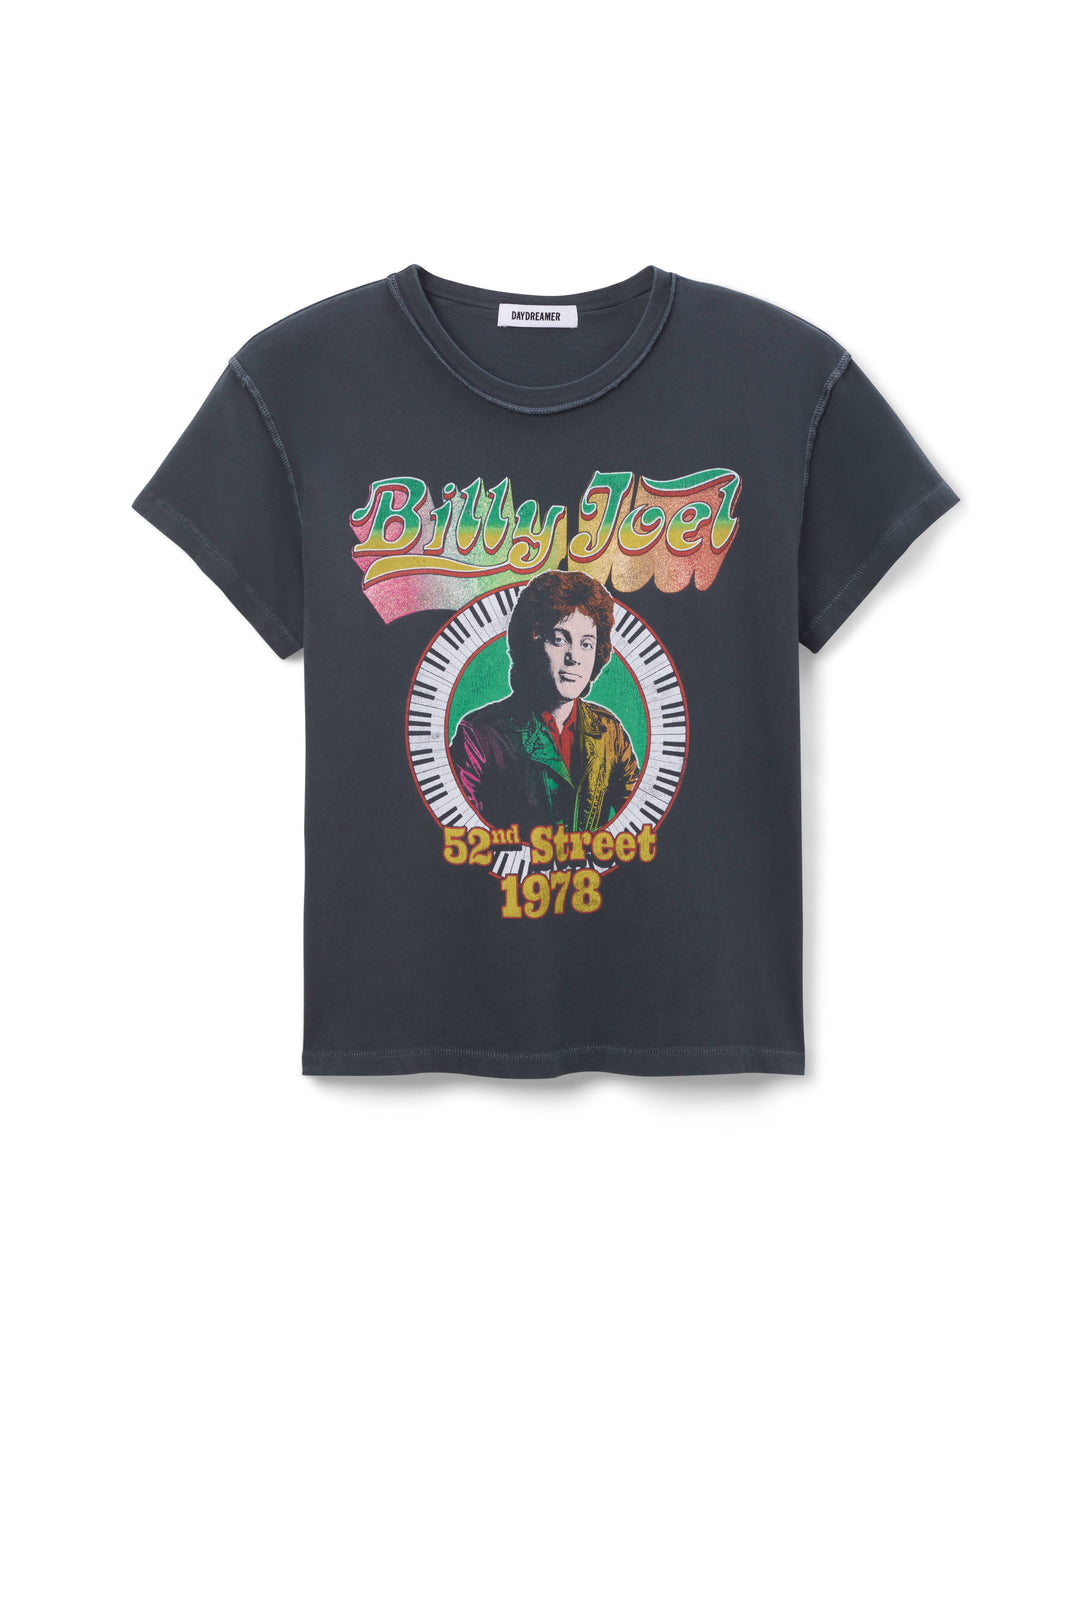 BILLY JOEL 1978 REVERSE TEE-VINTAGE BLACK - Kingfisher Road - Online Boutique